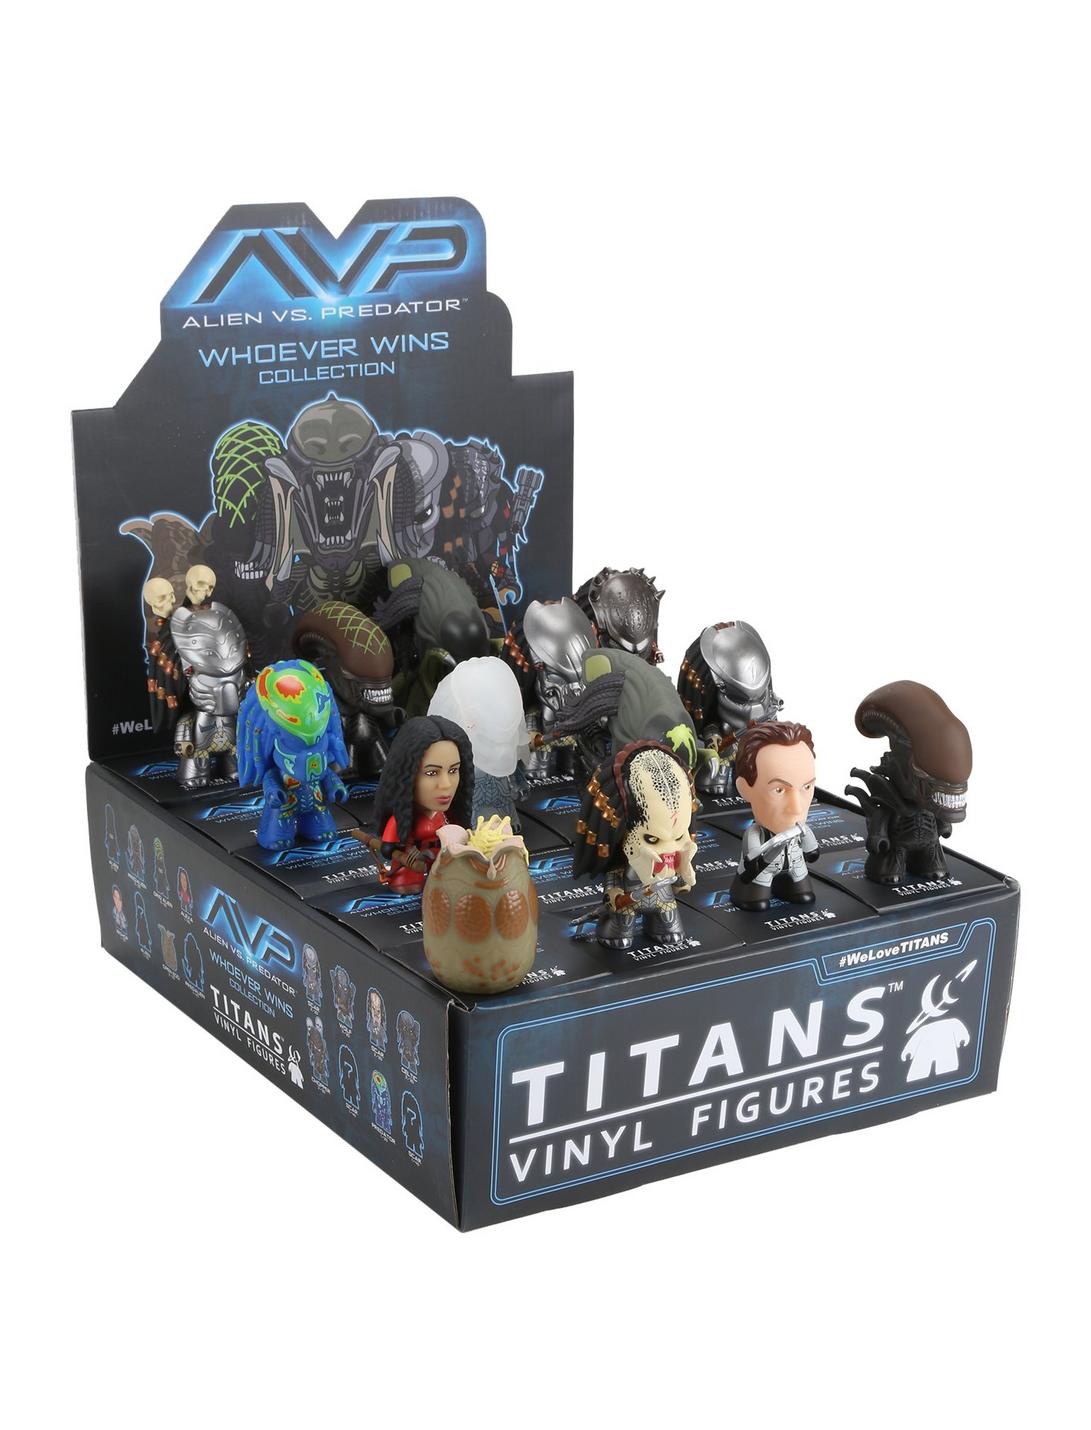 AVP: Alien Vs. Predator Whoever Wins Collection Titans Blind Box Vinyl Figure, , hi-res